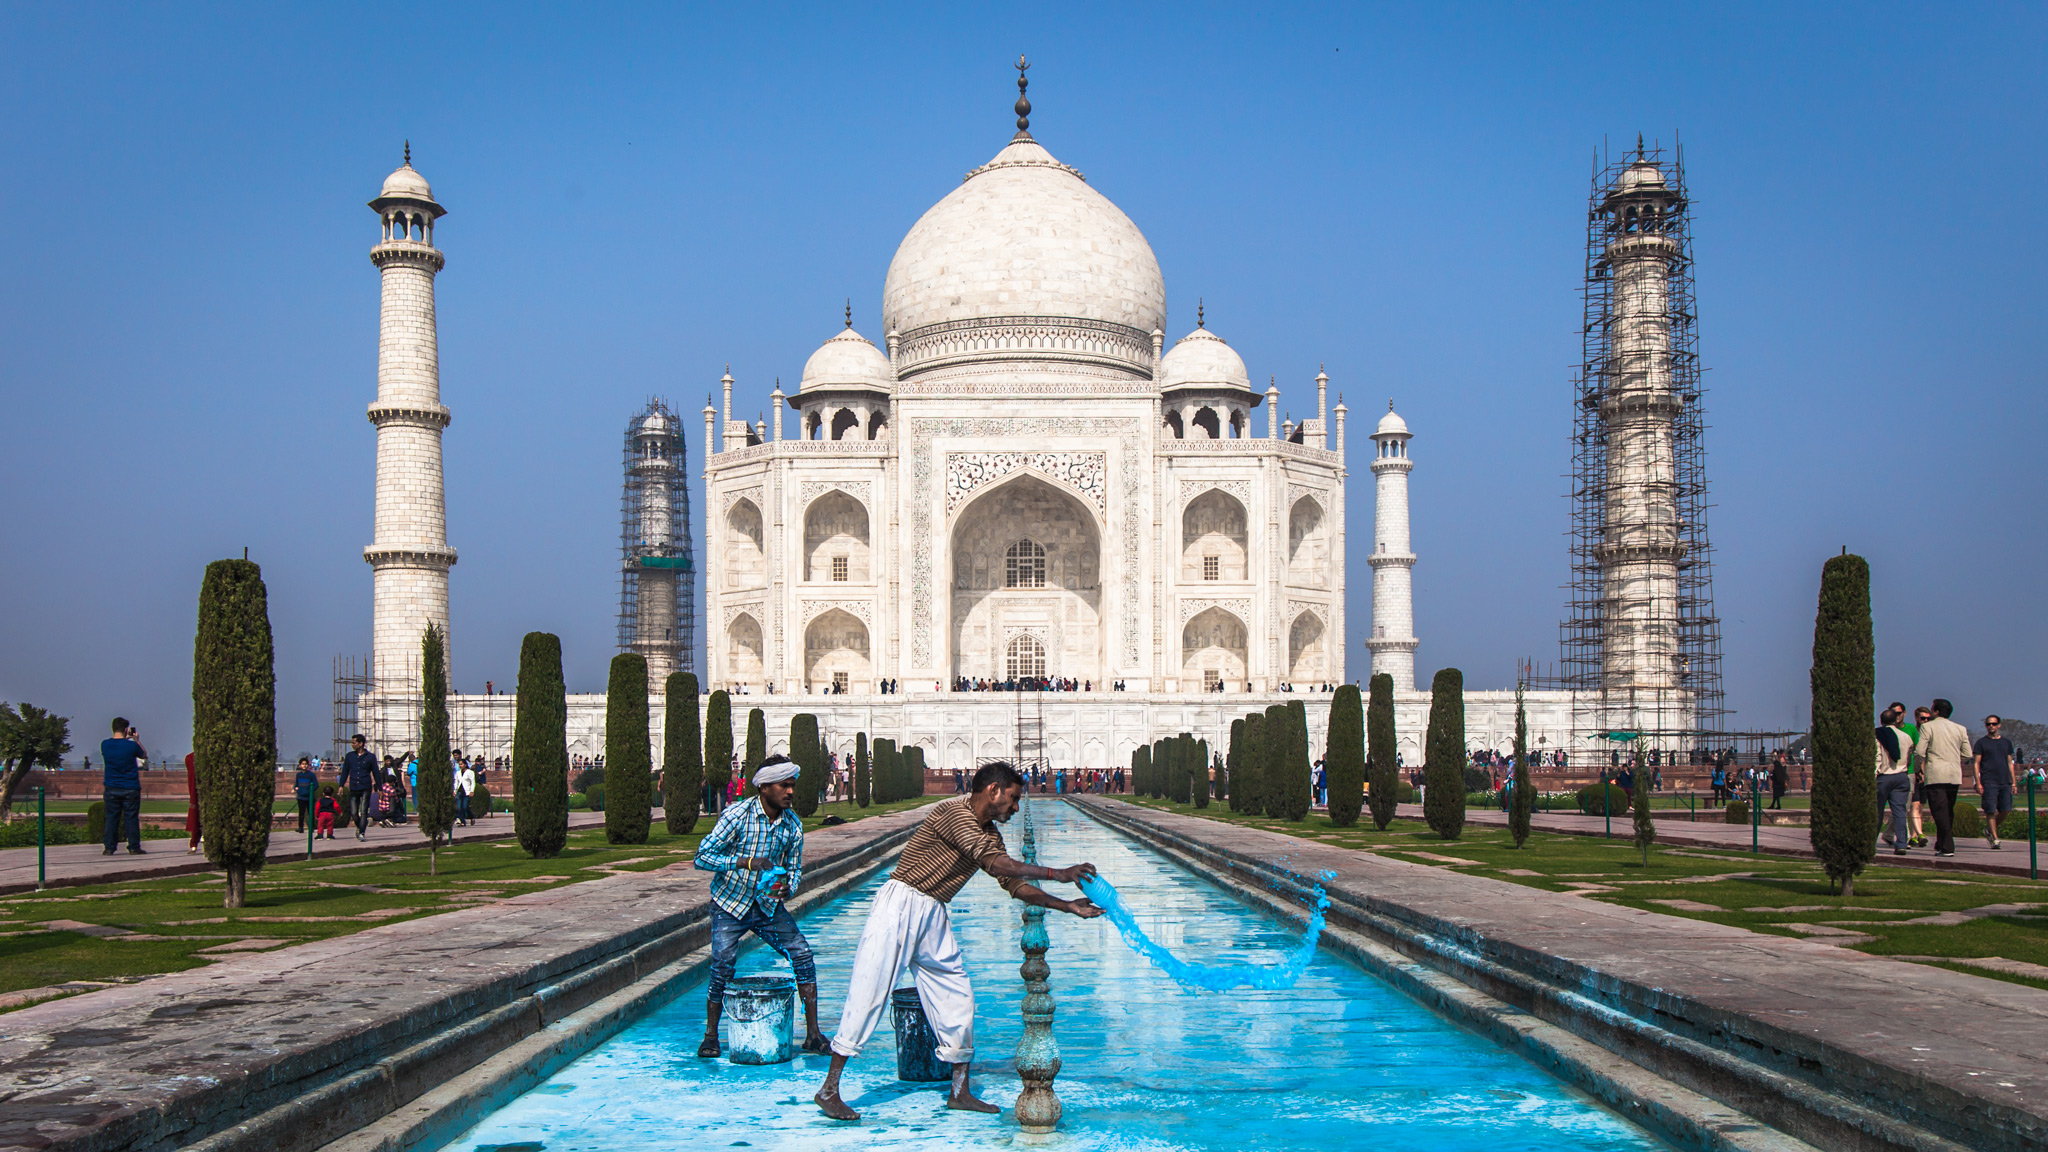 Taj Mahal Photography Tips & Travel Guide | Dan Flying Solo